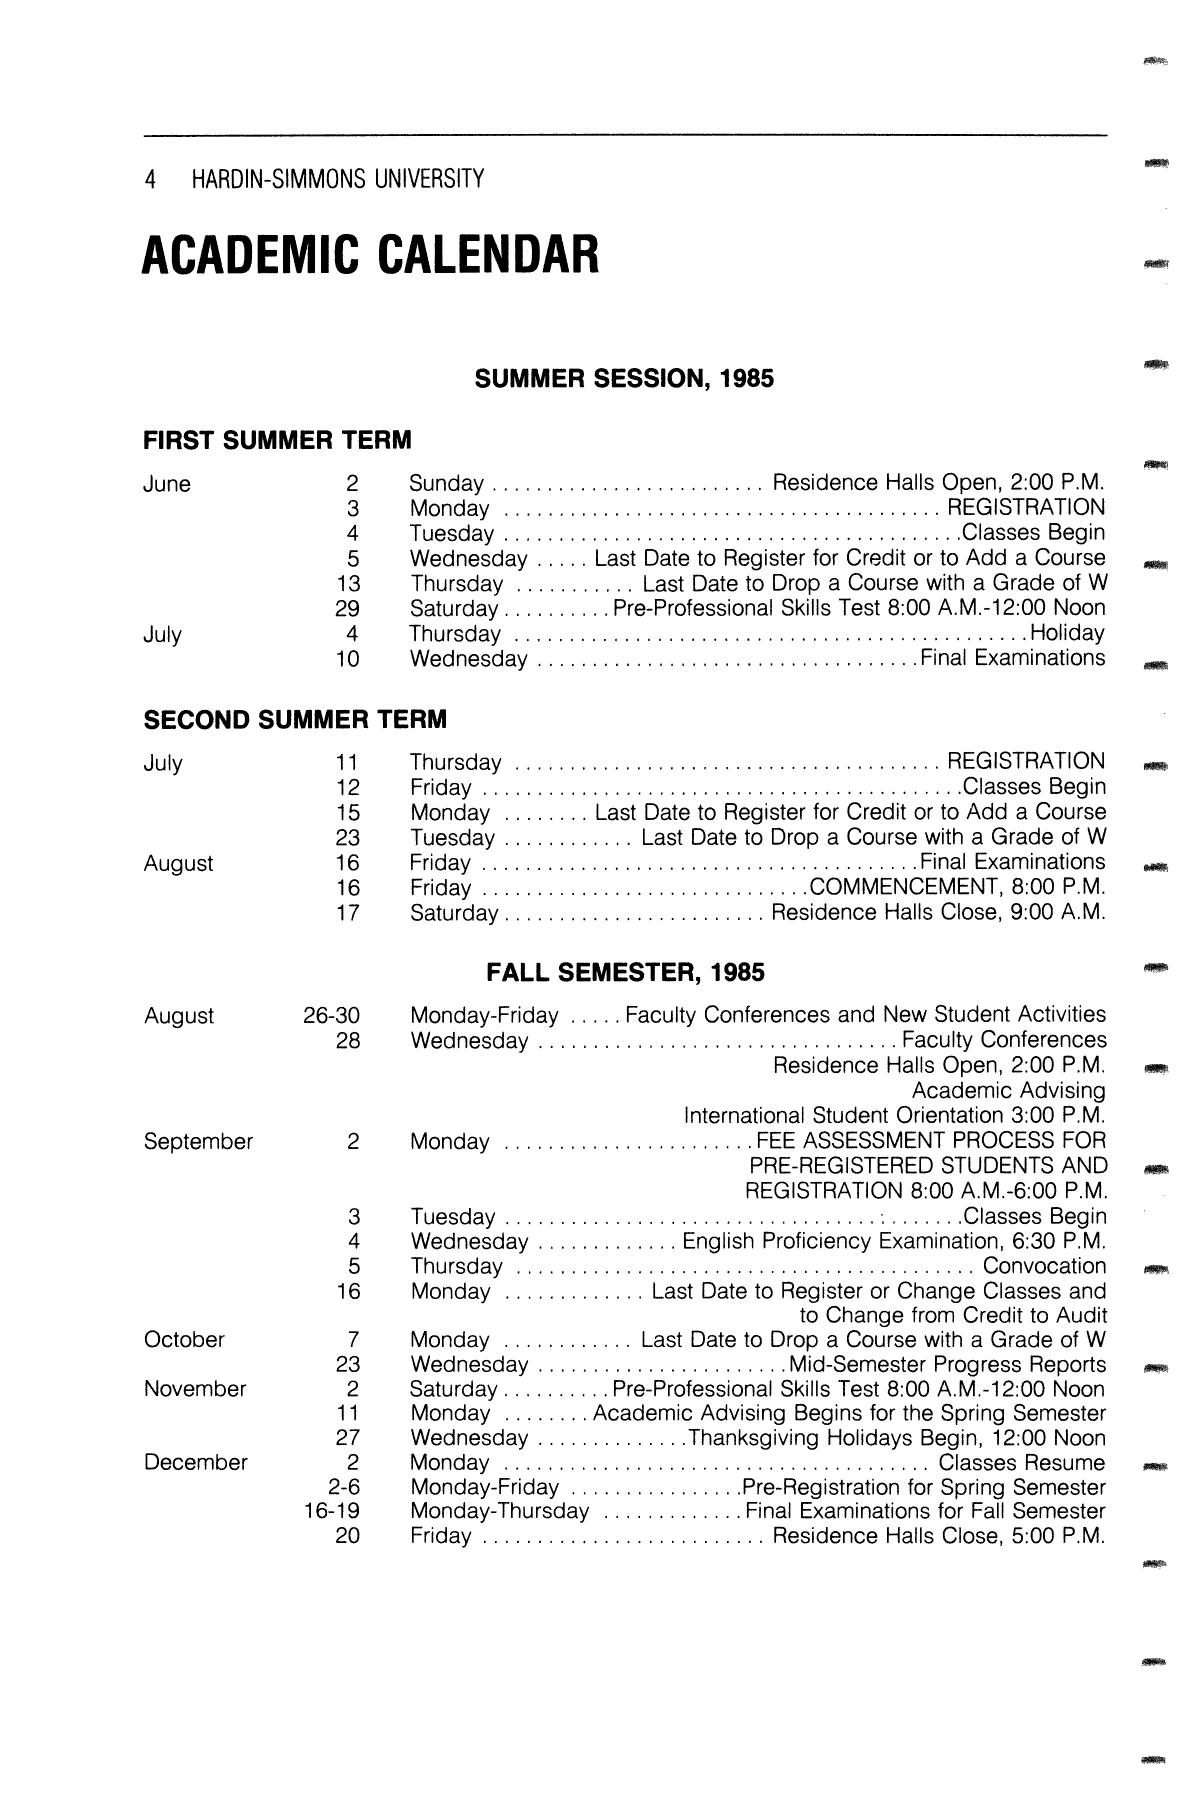 Catalog of Hardin-Simmons University, 1985-1986 Undergraduate Bulletin
                                                
                                                    4
                                                